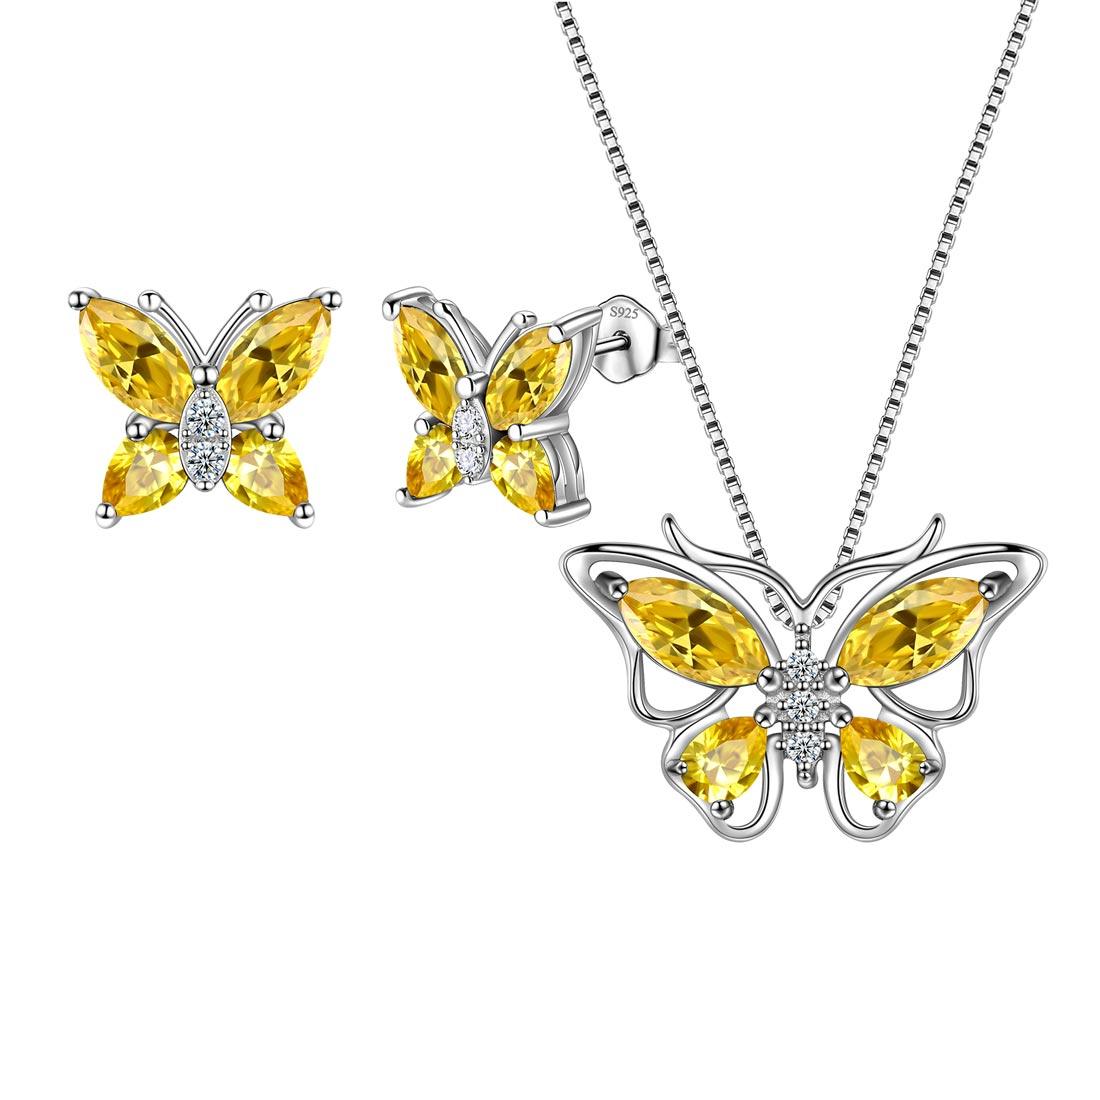 Butterfly Jewelry Set Birthstone November Citrine - Jewelry Set - Aurora Tears